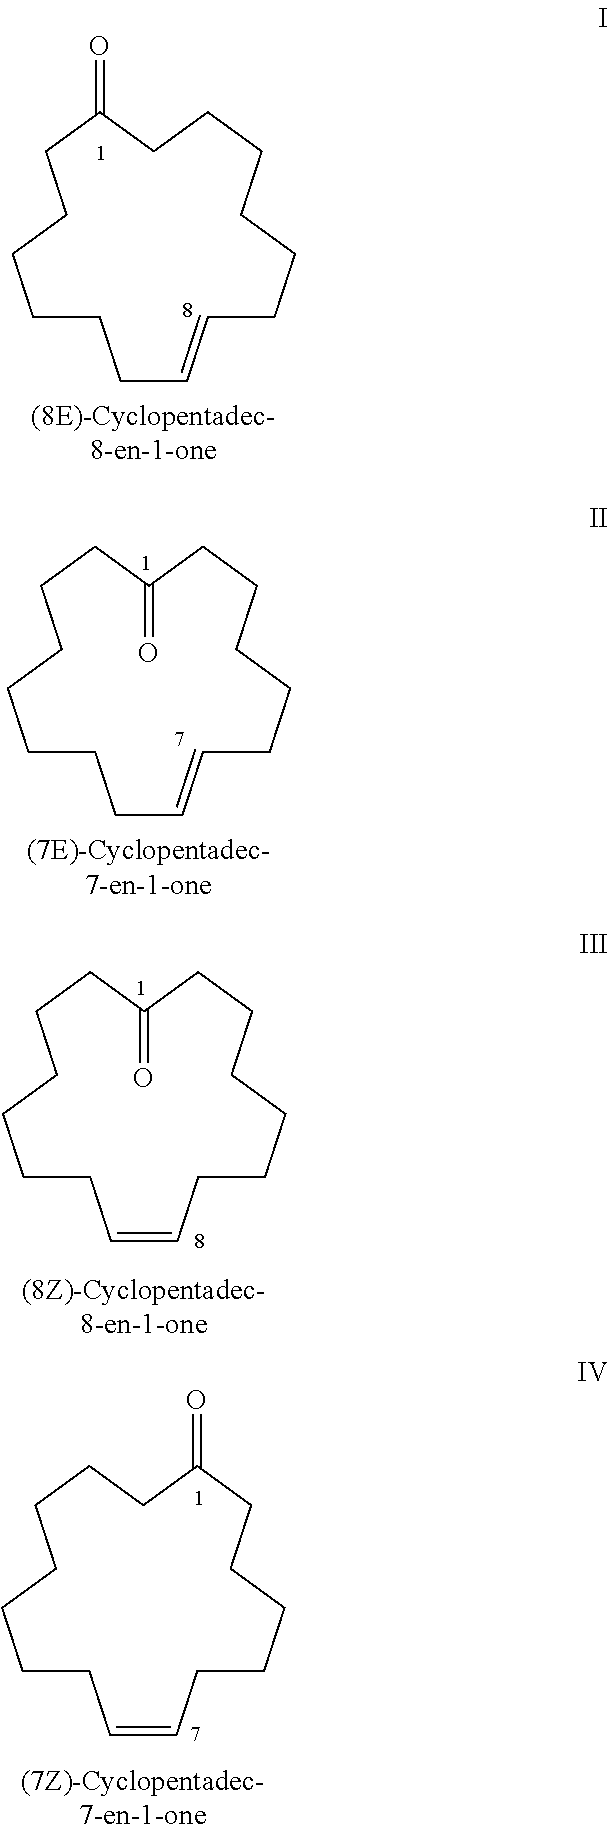 Method f0r the purification of cyclohexadec-8-en-1-one